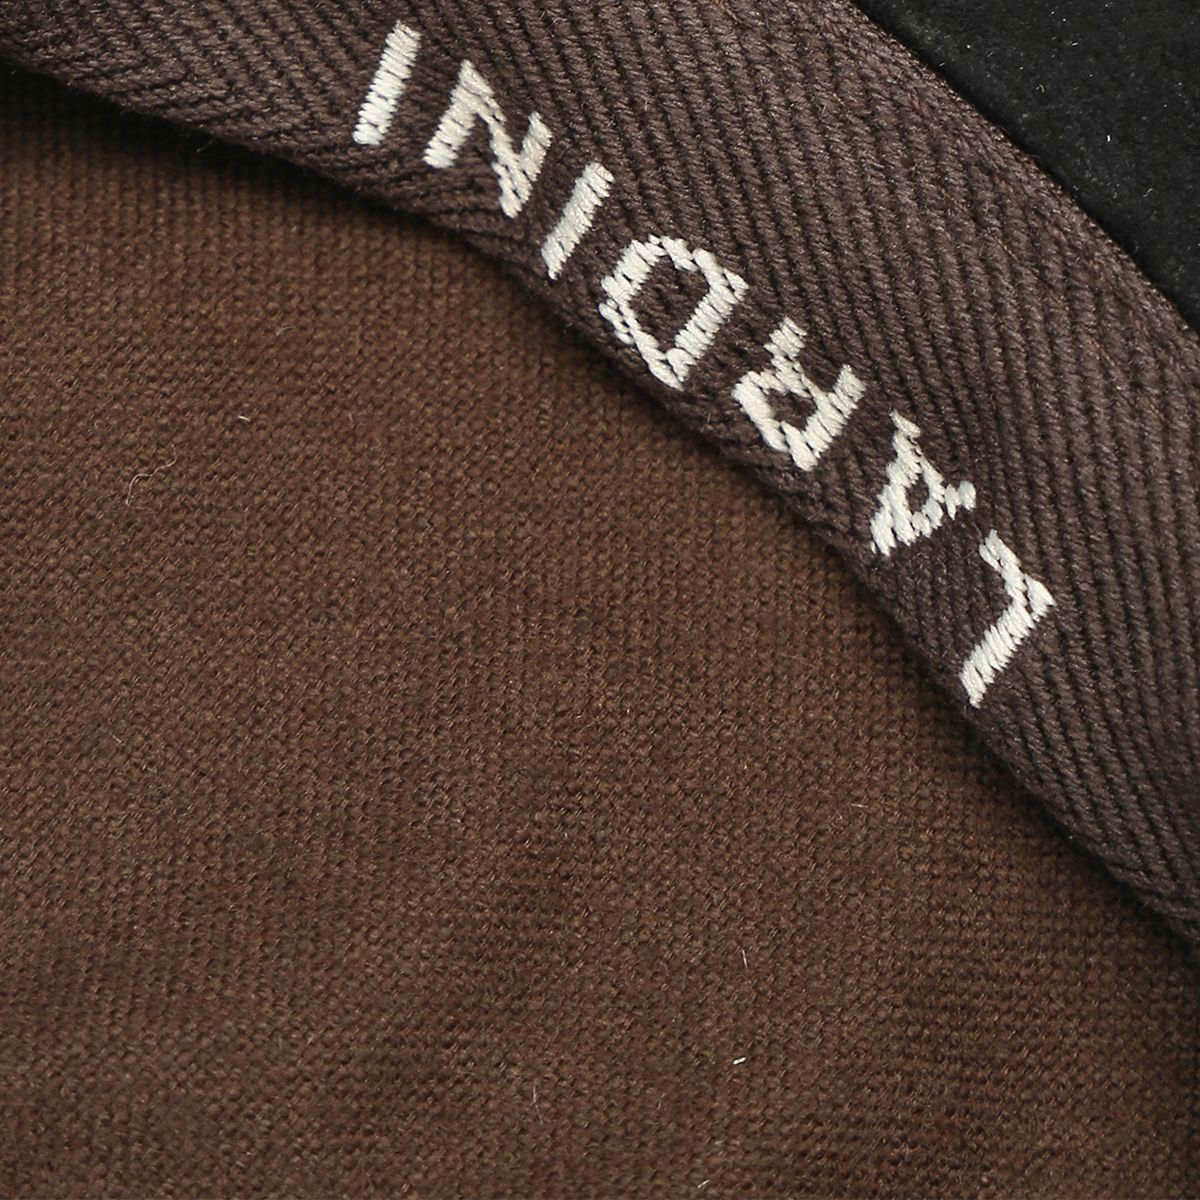 Dark Grey Wool Cap